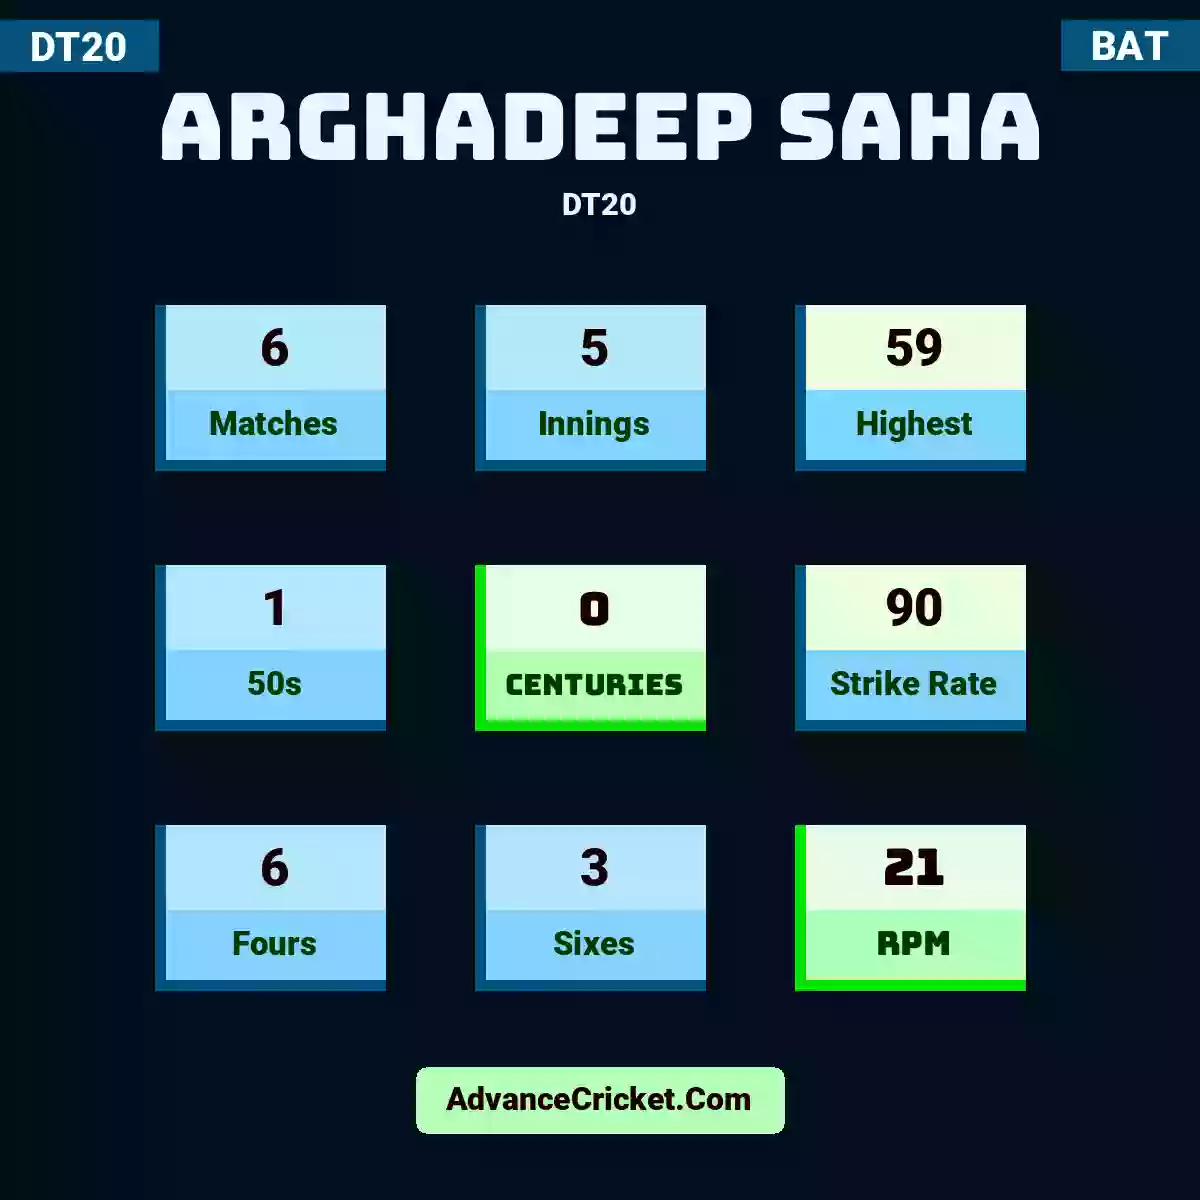 Arghadeep Saha DT20 , Arghadeep Saha played 6 matches, scored 59 runs as highest, 1 half-centuries, and 0 centuries, with a strike rate of 90. A.Saha hit 6 fours and 3 sixes, with an RPM of 21.